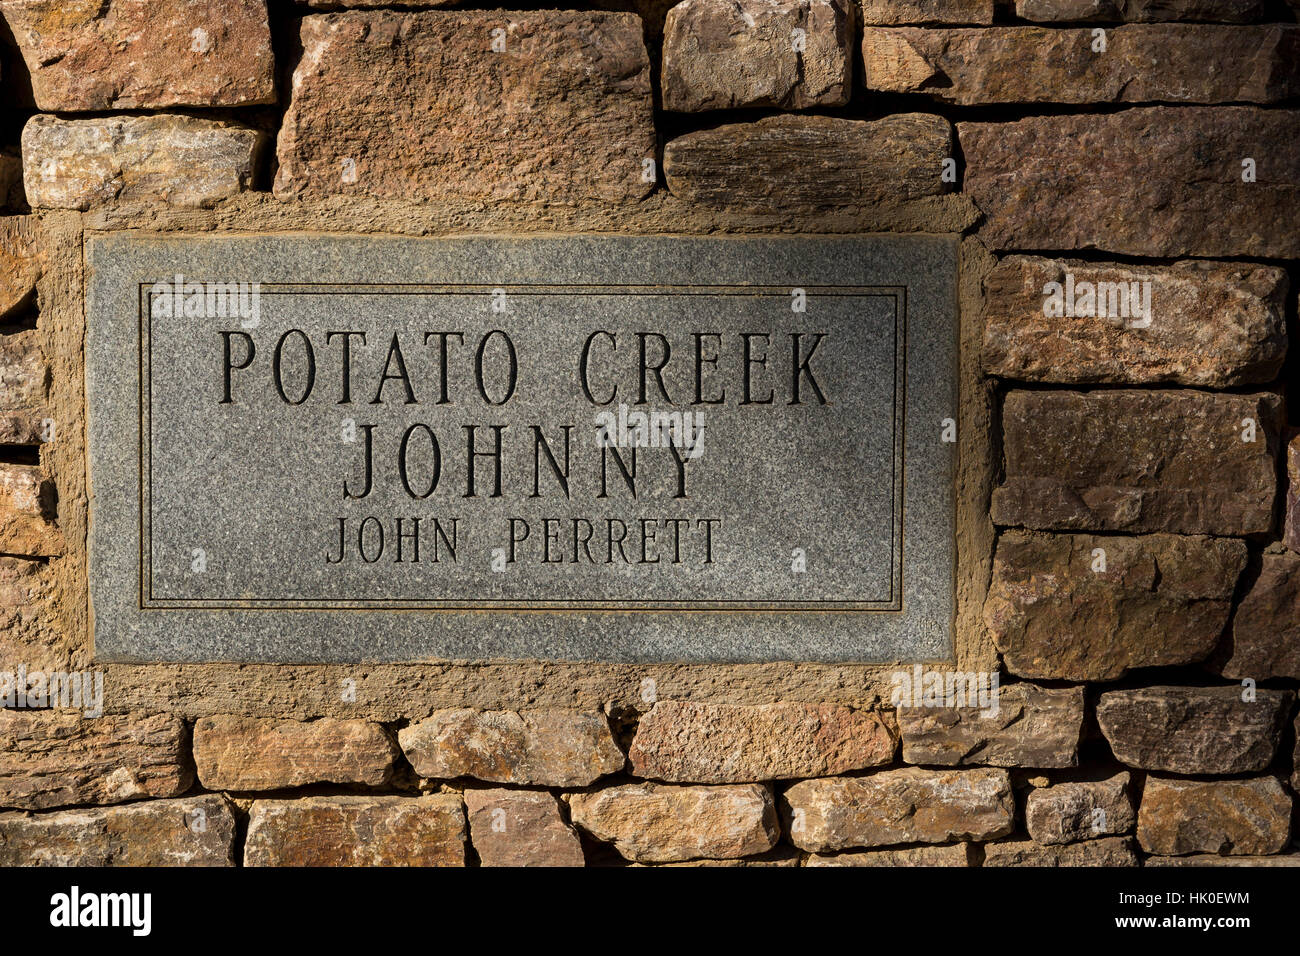 Potato Creek Johnny grave. Sept, 2016. Deadwood, South Dakota, USA Stock Photo